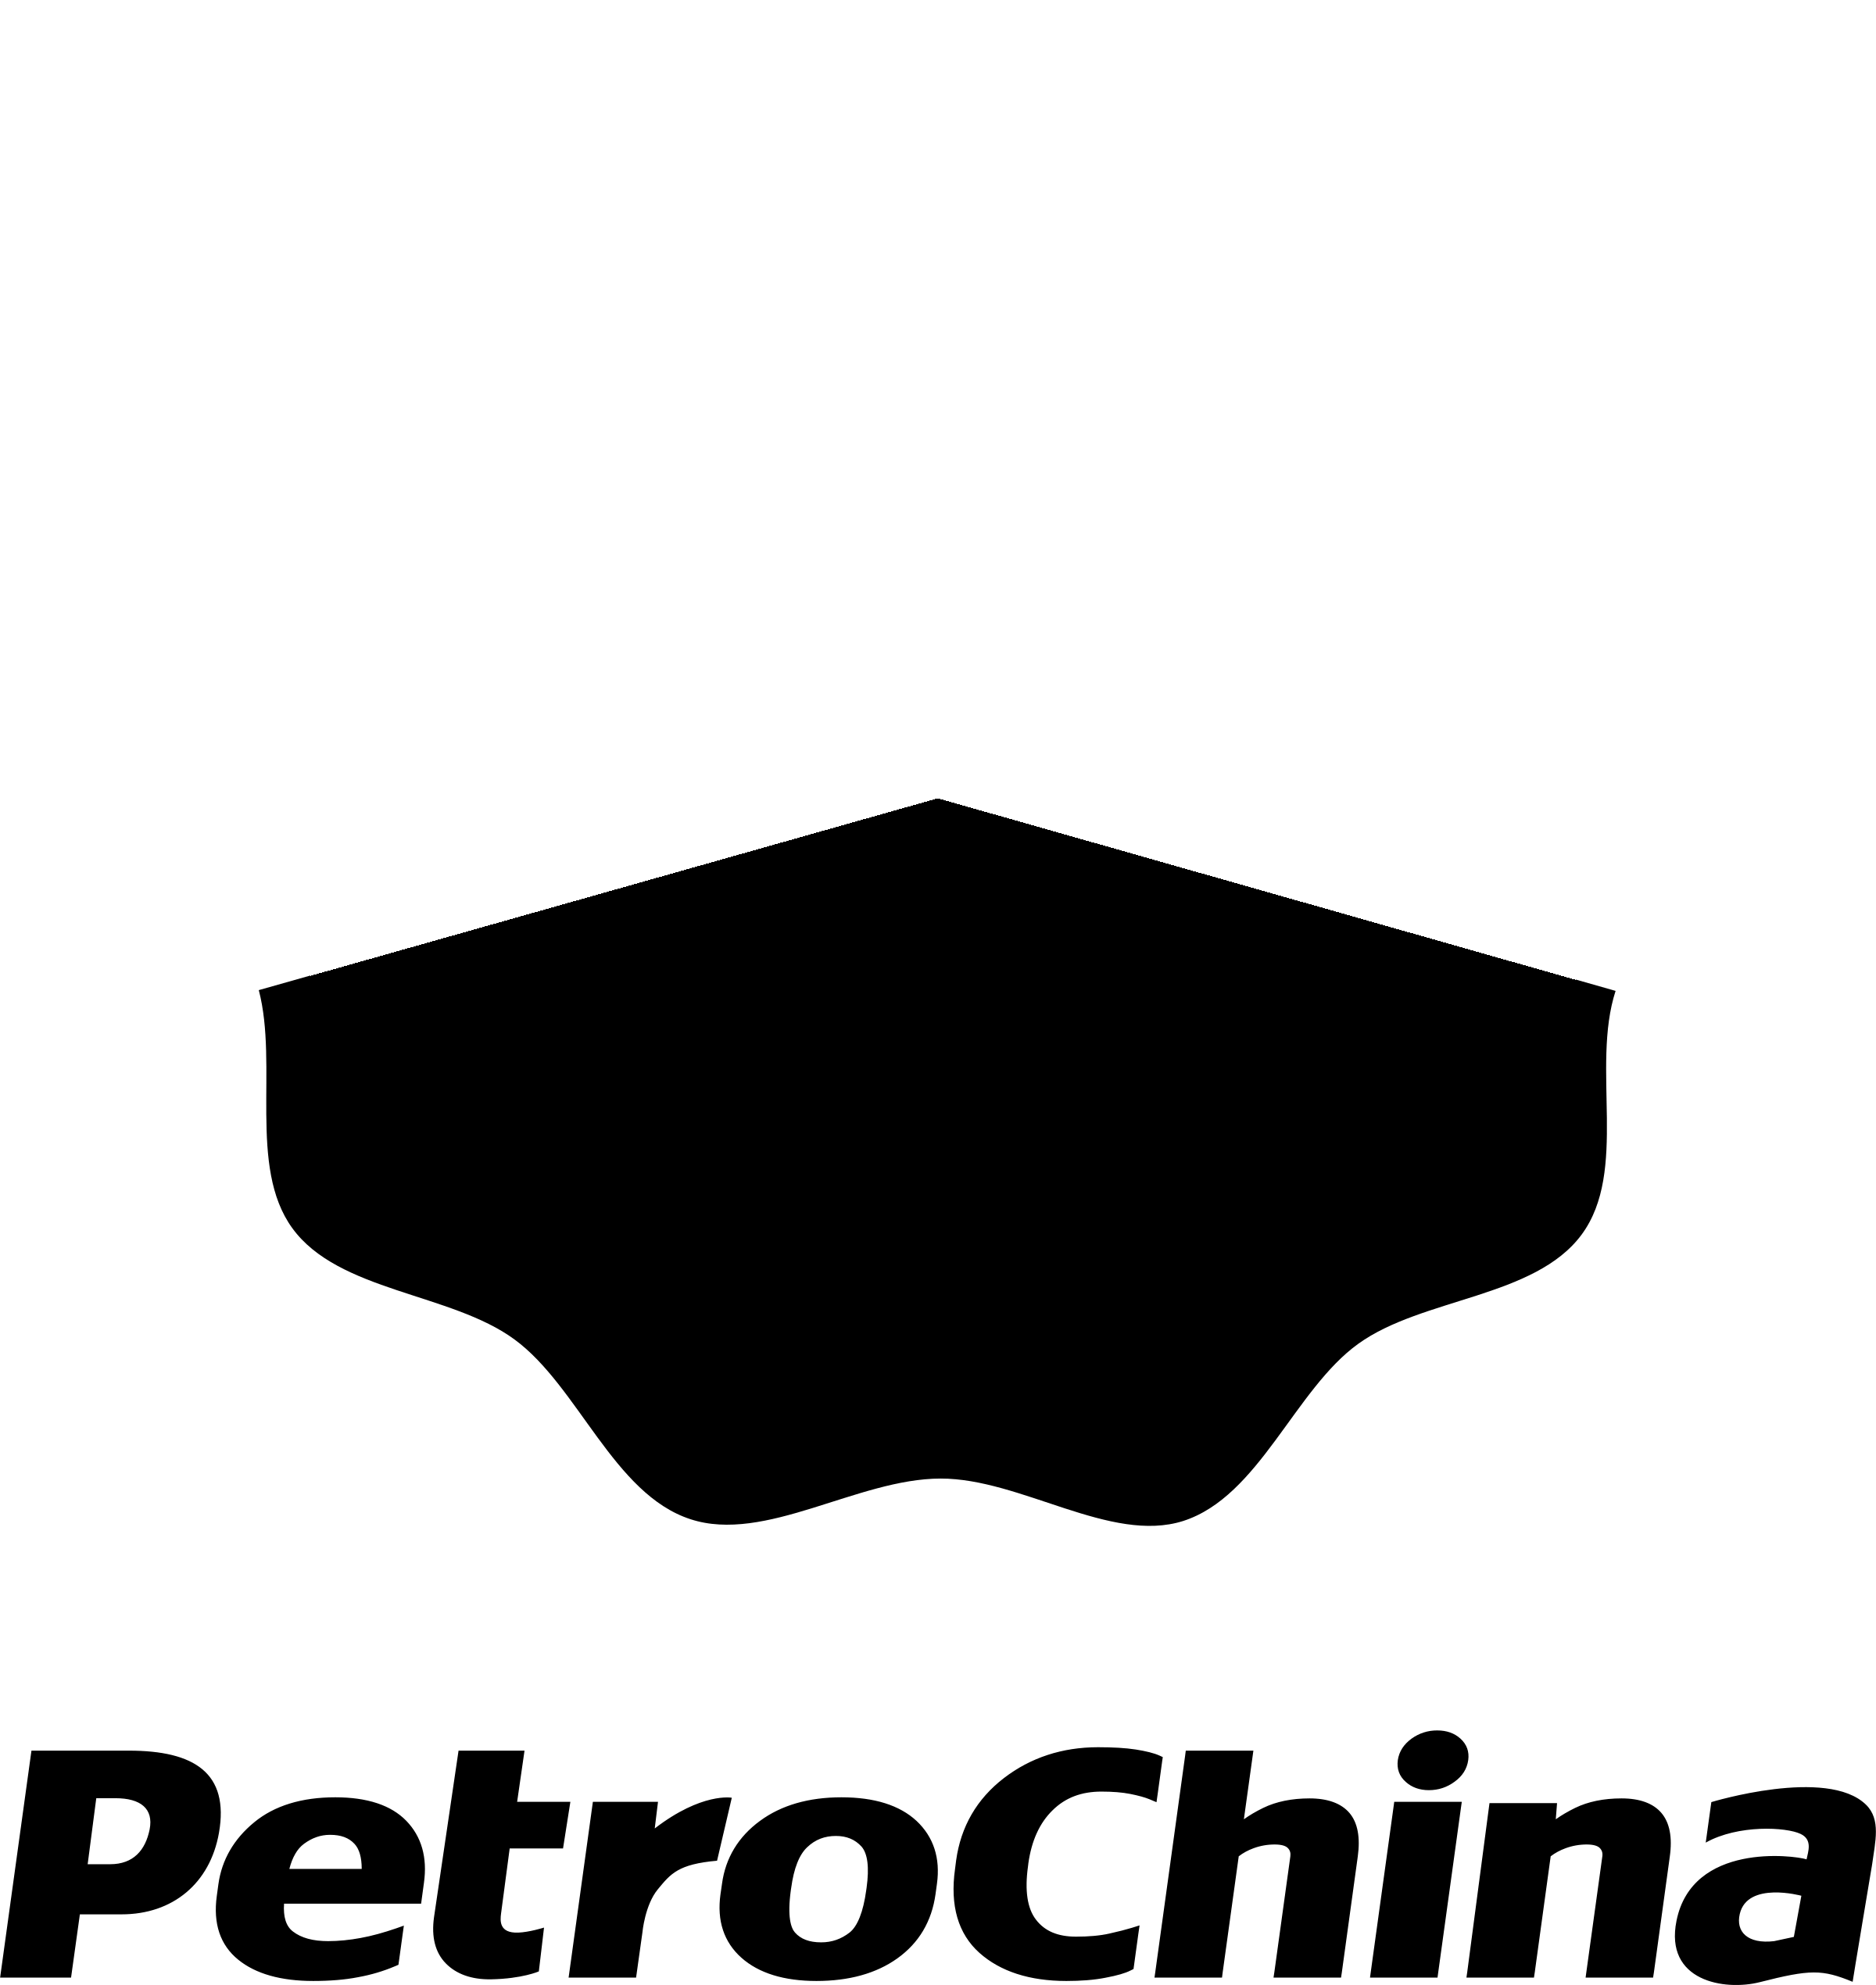 PetroChina Logo - PetroChina Logo PNG Transparent & SVG Vector - Freebie Supply